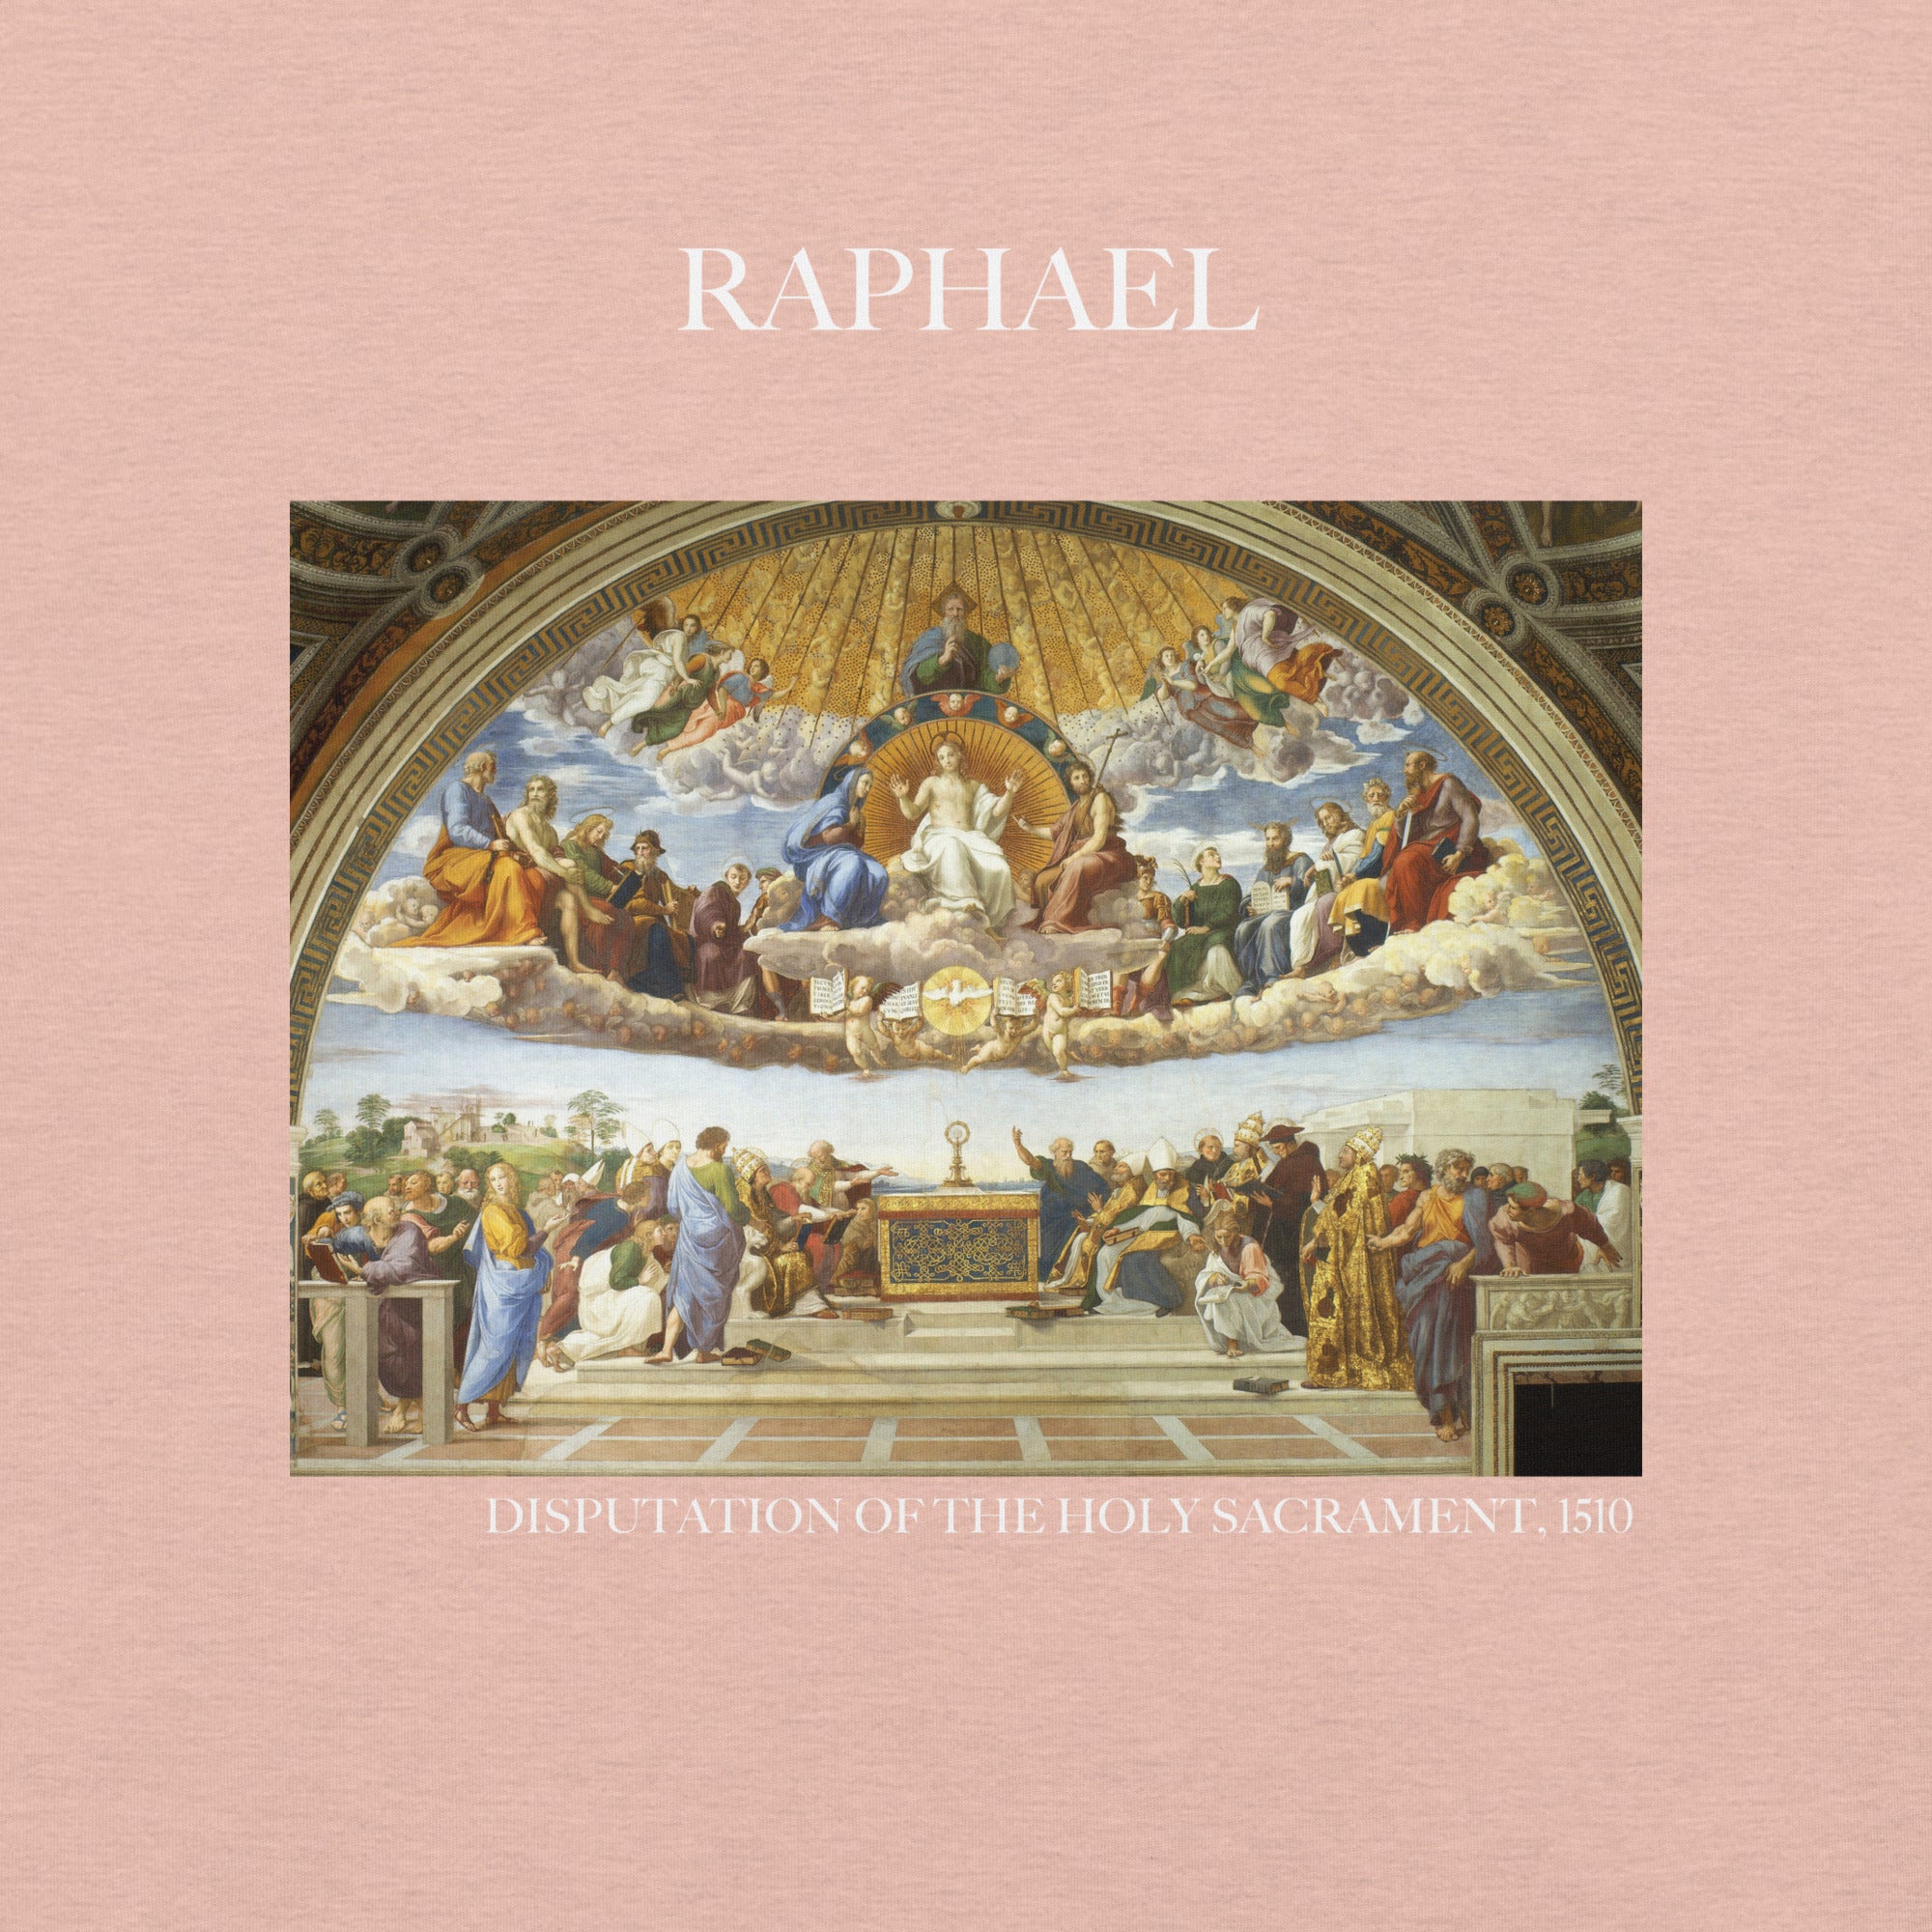 Raphael 'Disputation of the Holy Sacrament' Famous Painting T-Shirt | Unisex Classic Art Tee